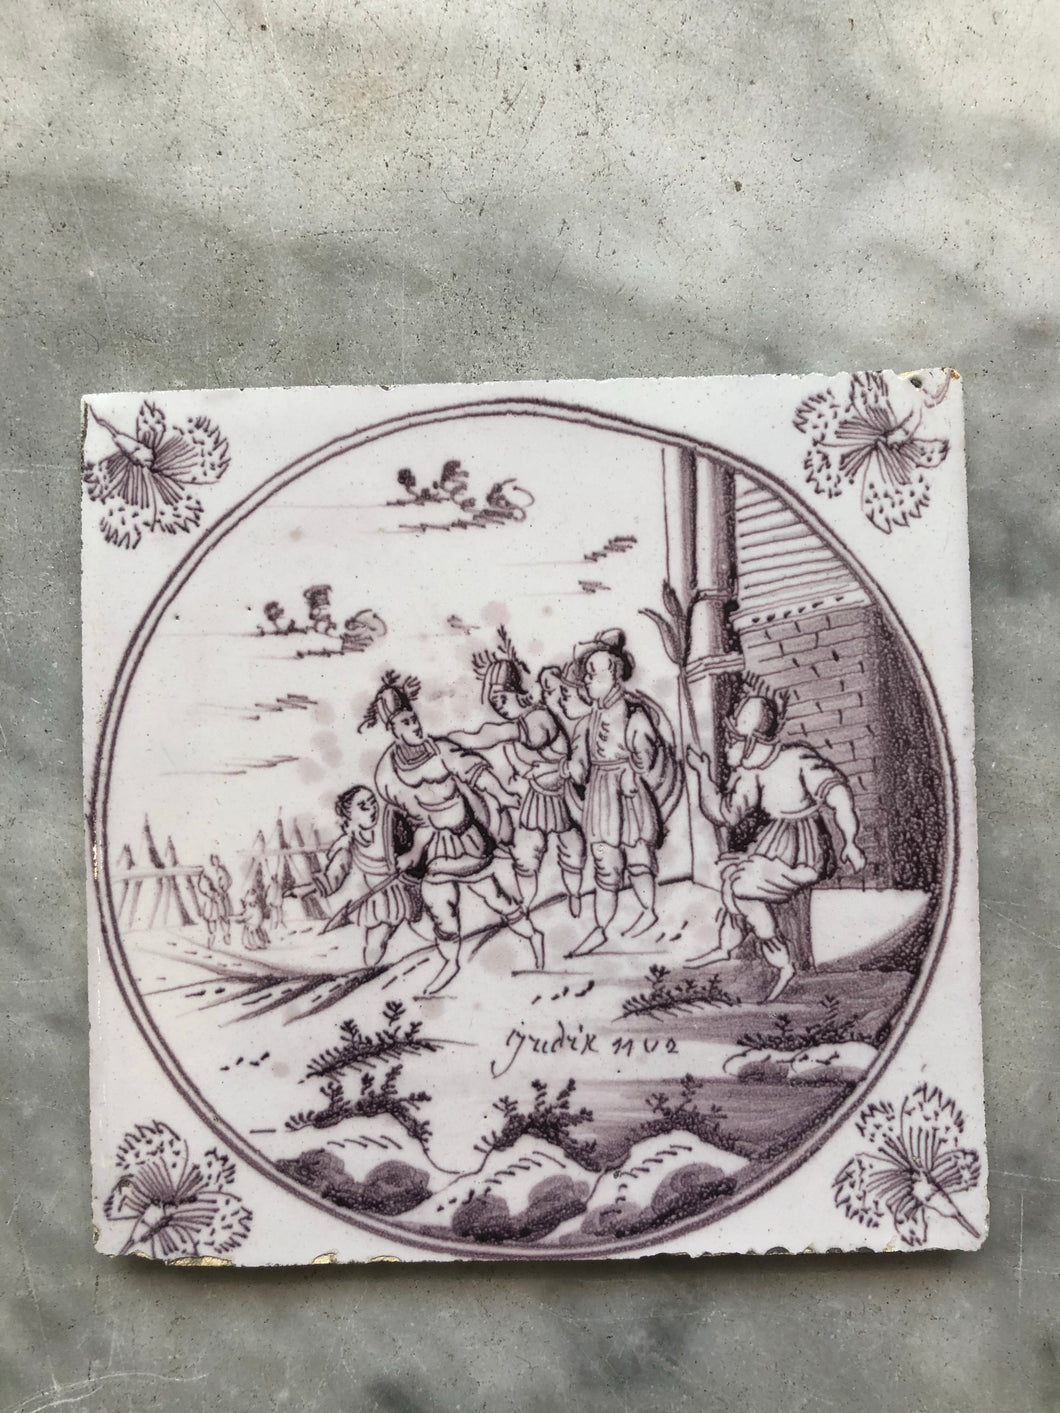 18 th century delft tile with bibical scene